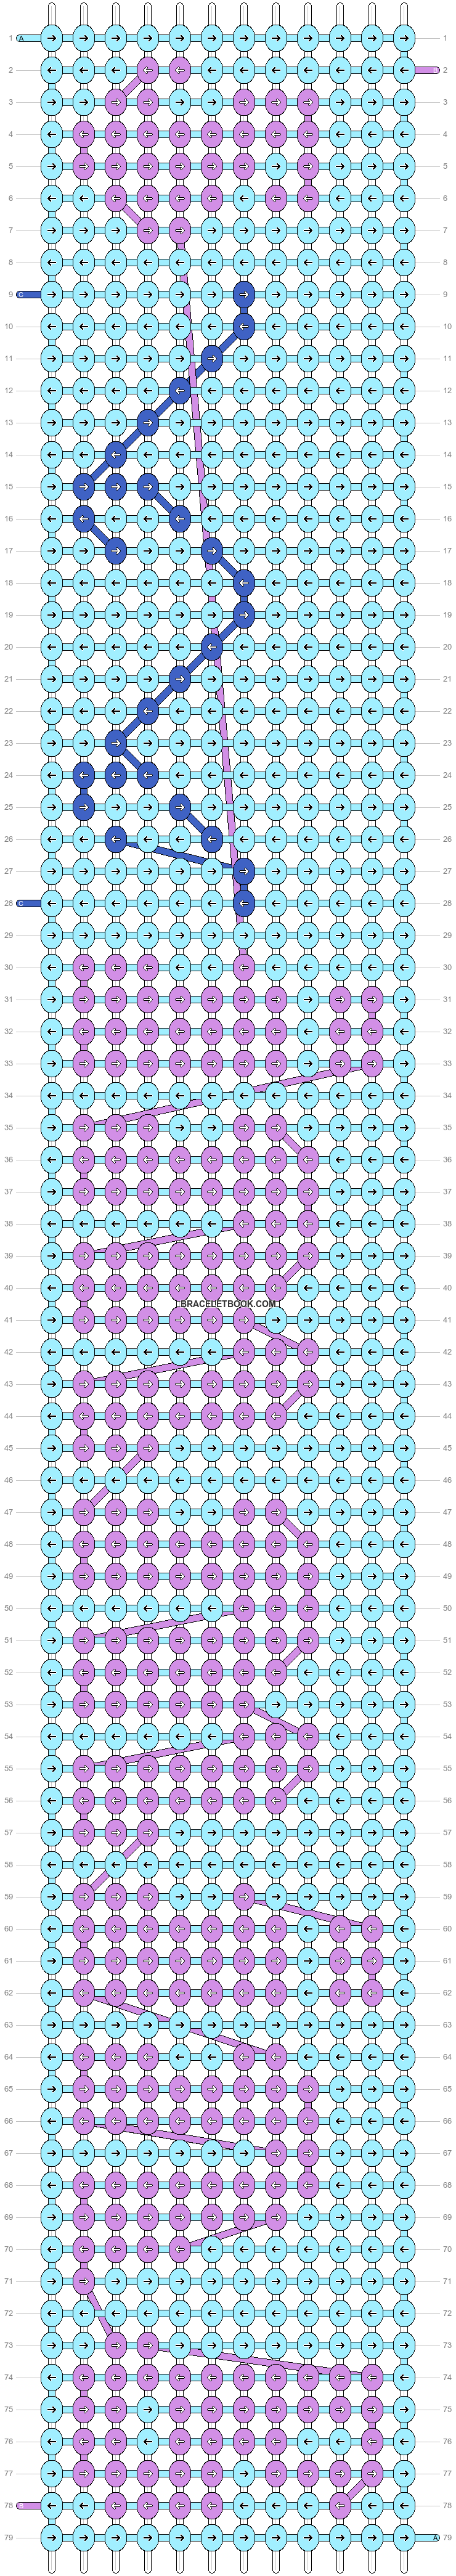 Alpha pattern #60690 variation #110556 pattern